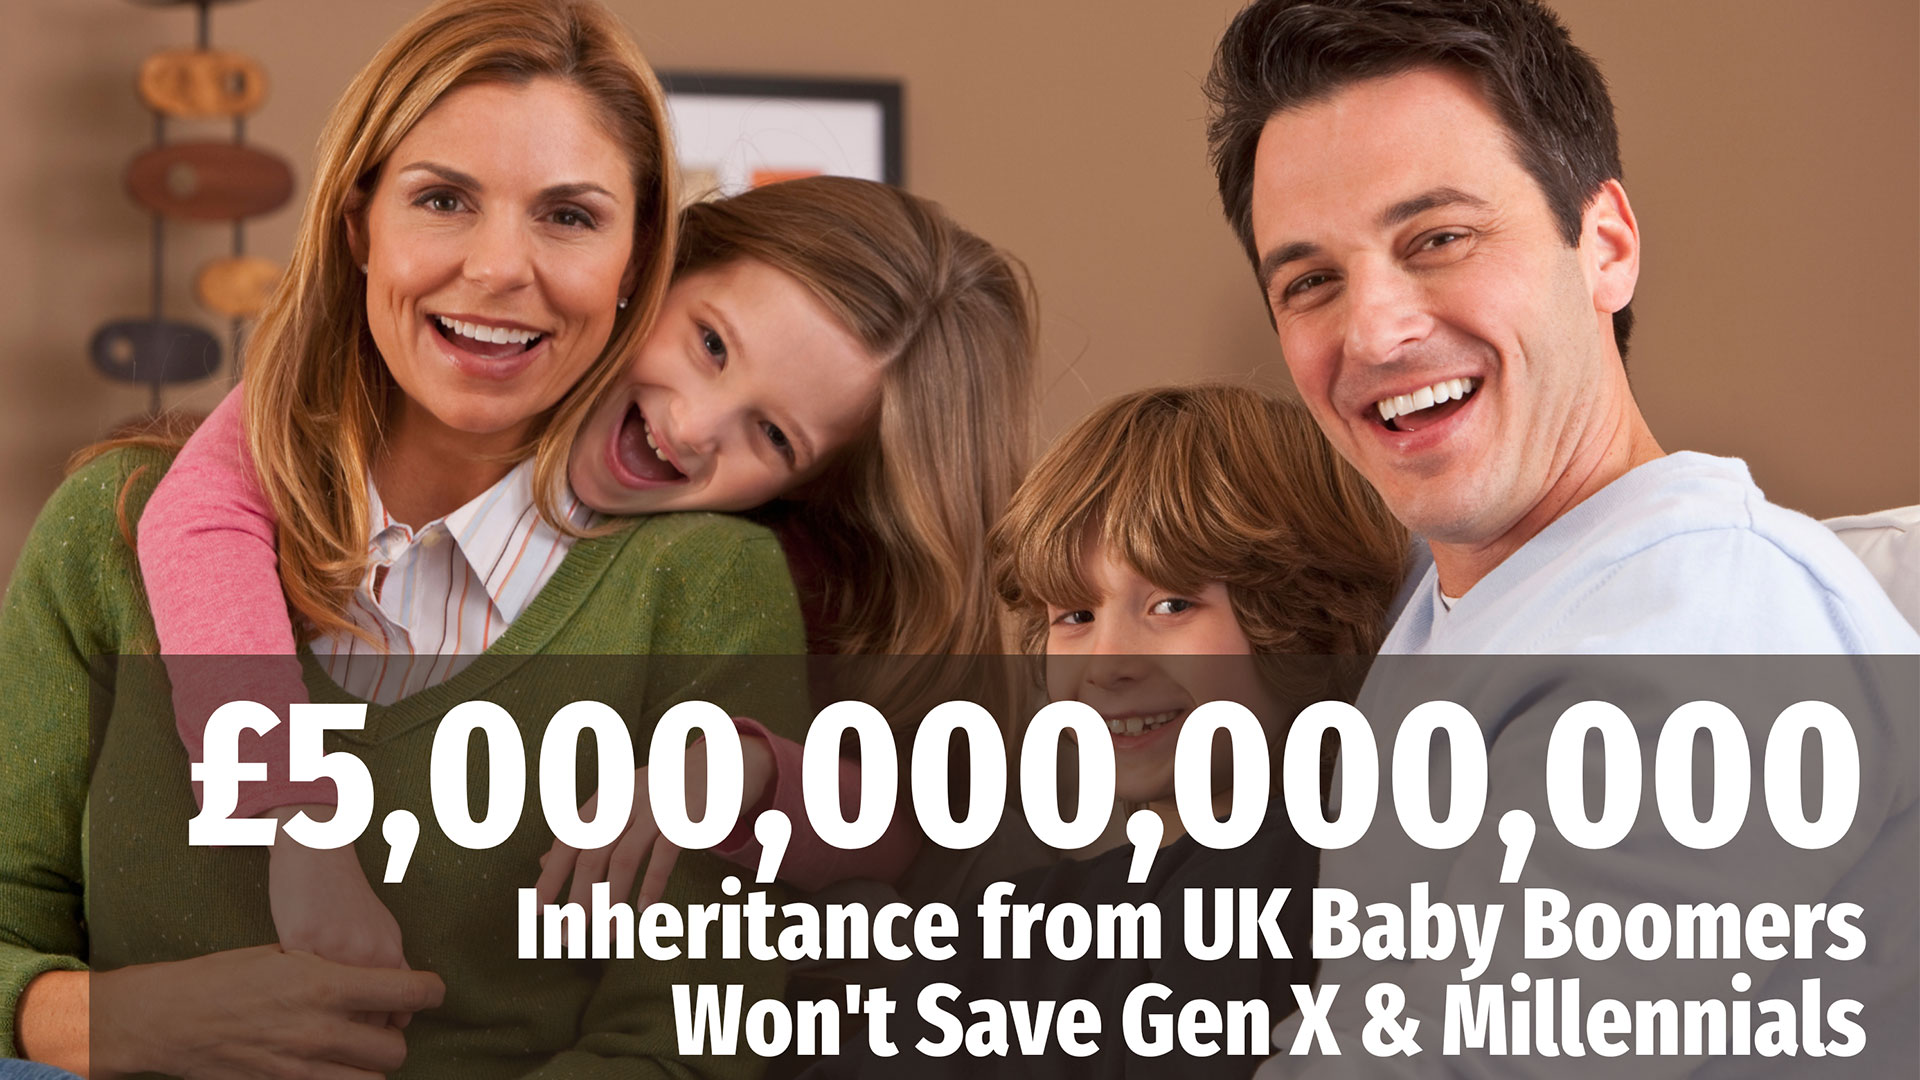 Harrogate’s £8.23 Billion Inheritance from Child Boomers Will not Save Gen X and Millennials